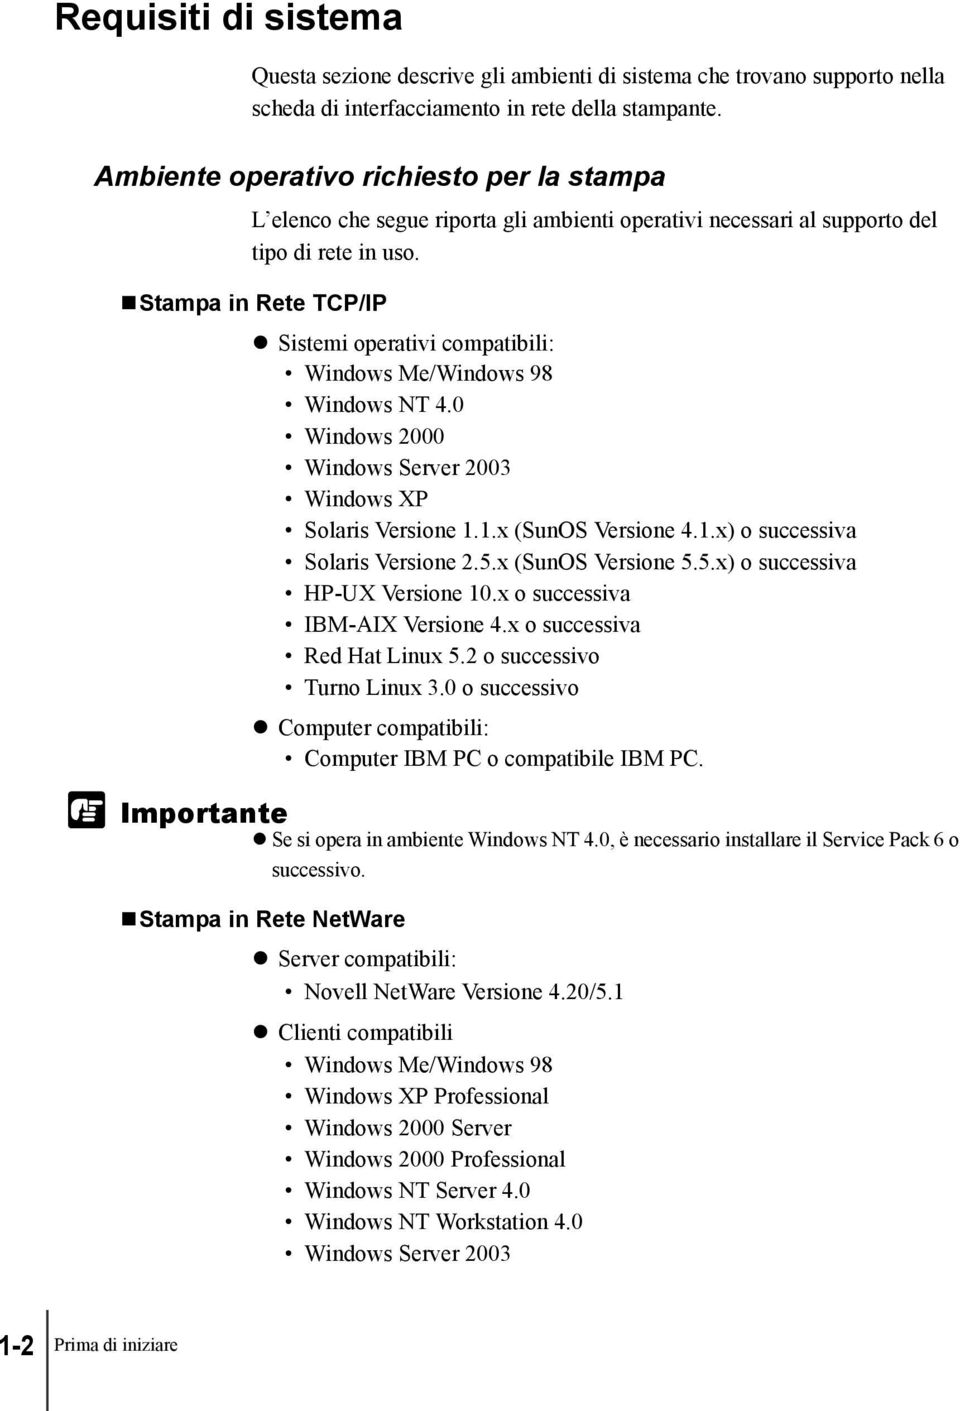 Stampa in Rete TCP/IP Sistemi operativi compatibili: Windows Me/Windows 98 Windows NT 4.0 Windows 2000 Windows Server 2003 Windows XP Solaris Versione 1.1.x (SunOS Versione 4.1.x) o successiva Solaris Versione 2.